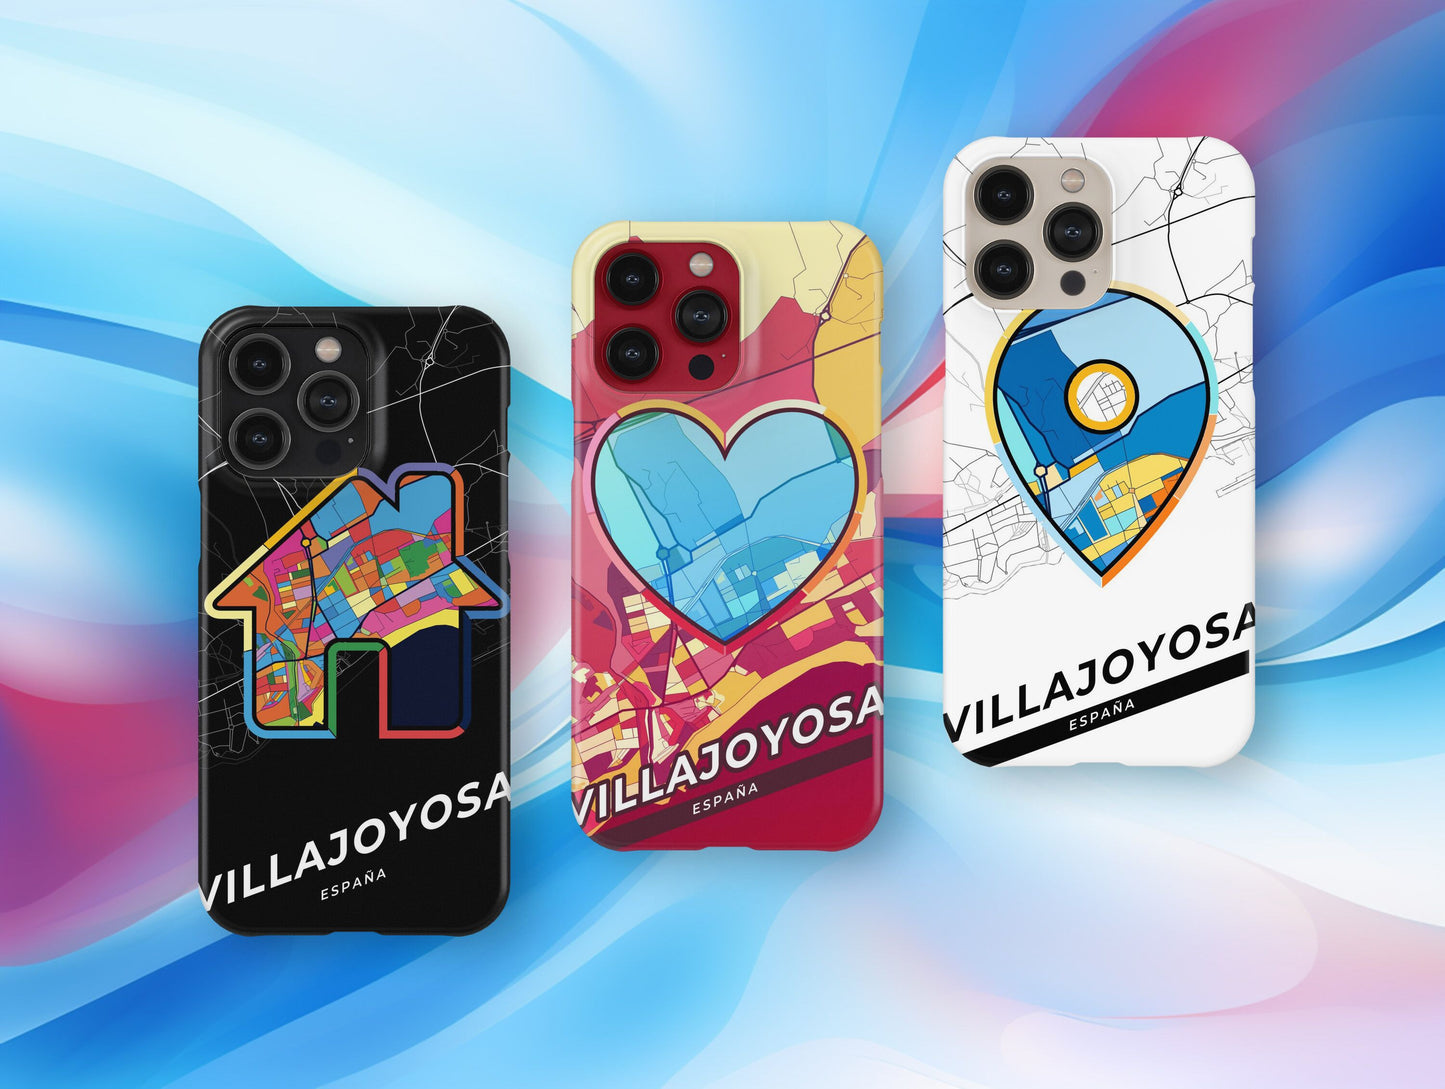 Villajoyosa Spain slim phone case with colorful icon